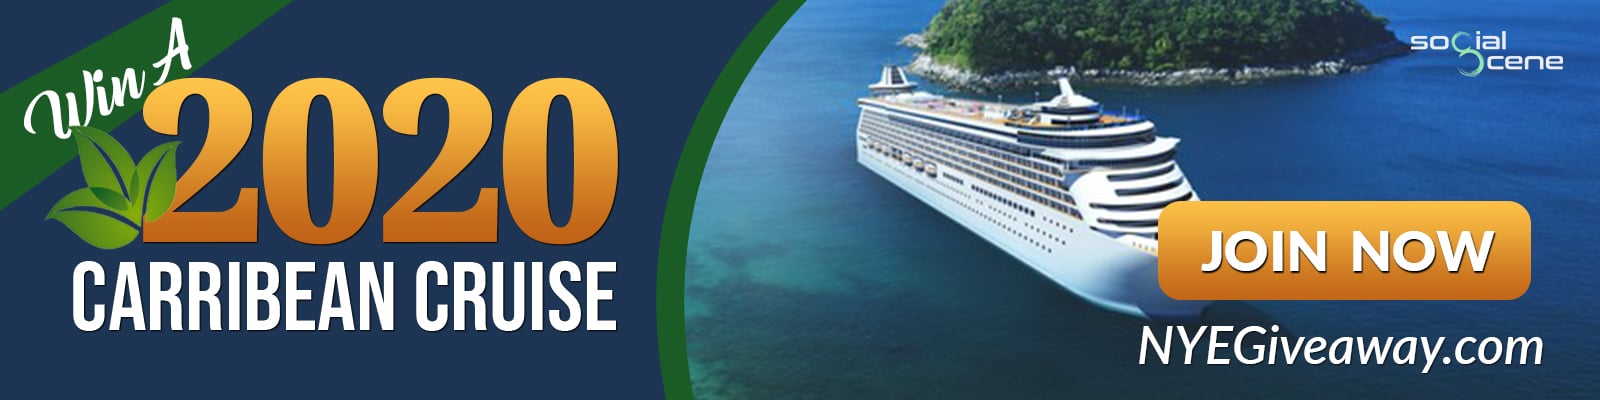 2020 Carribean Cruise